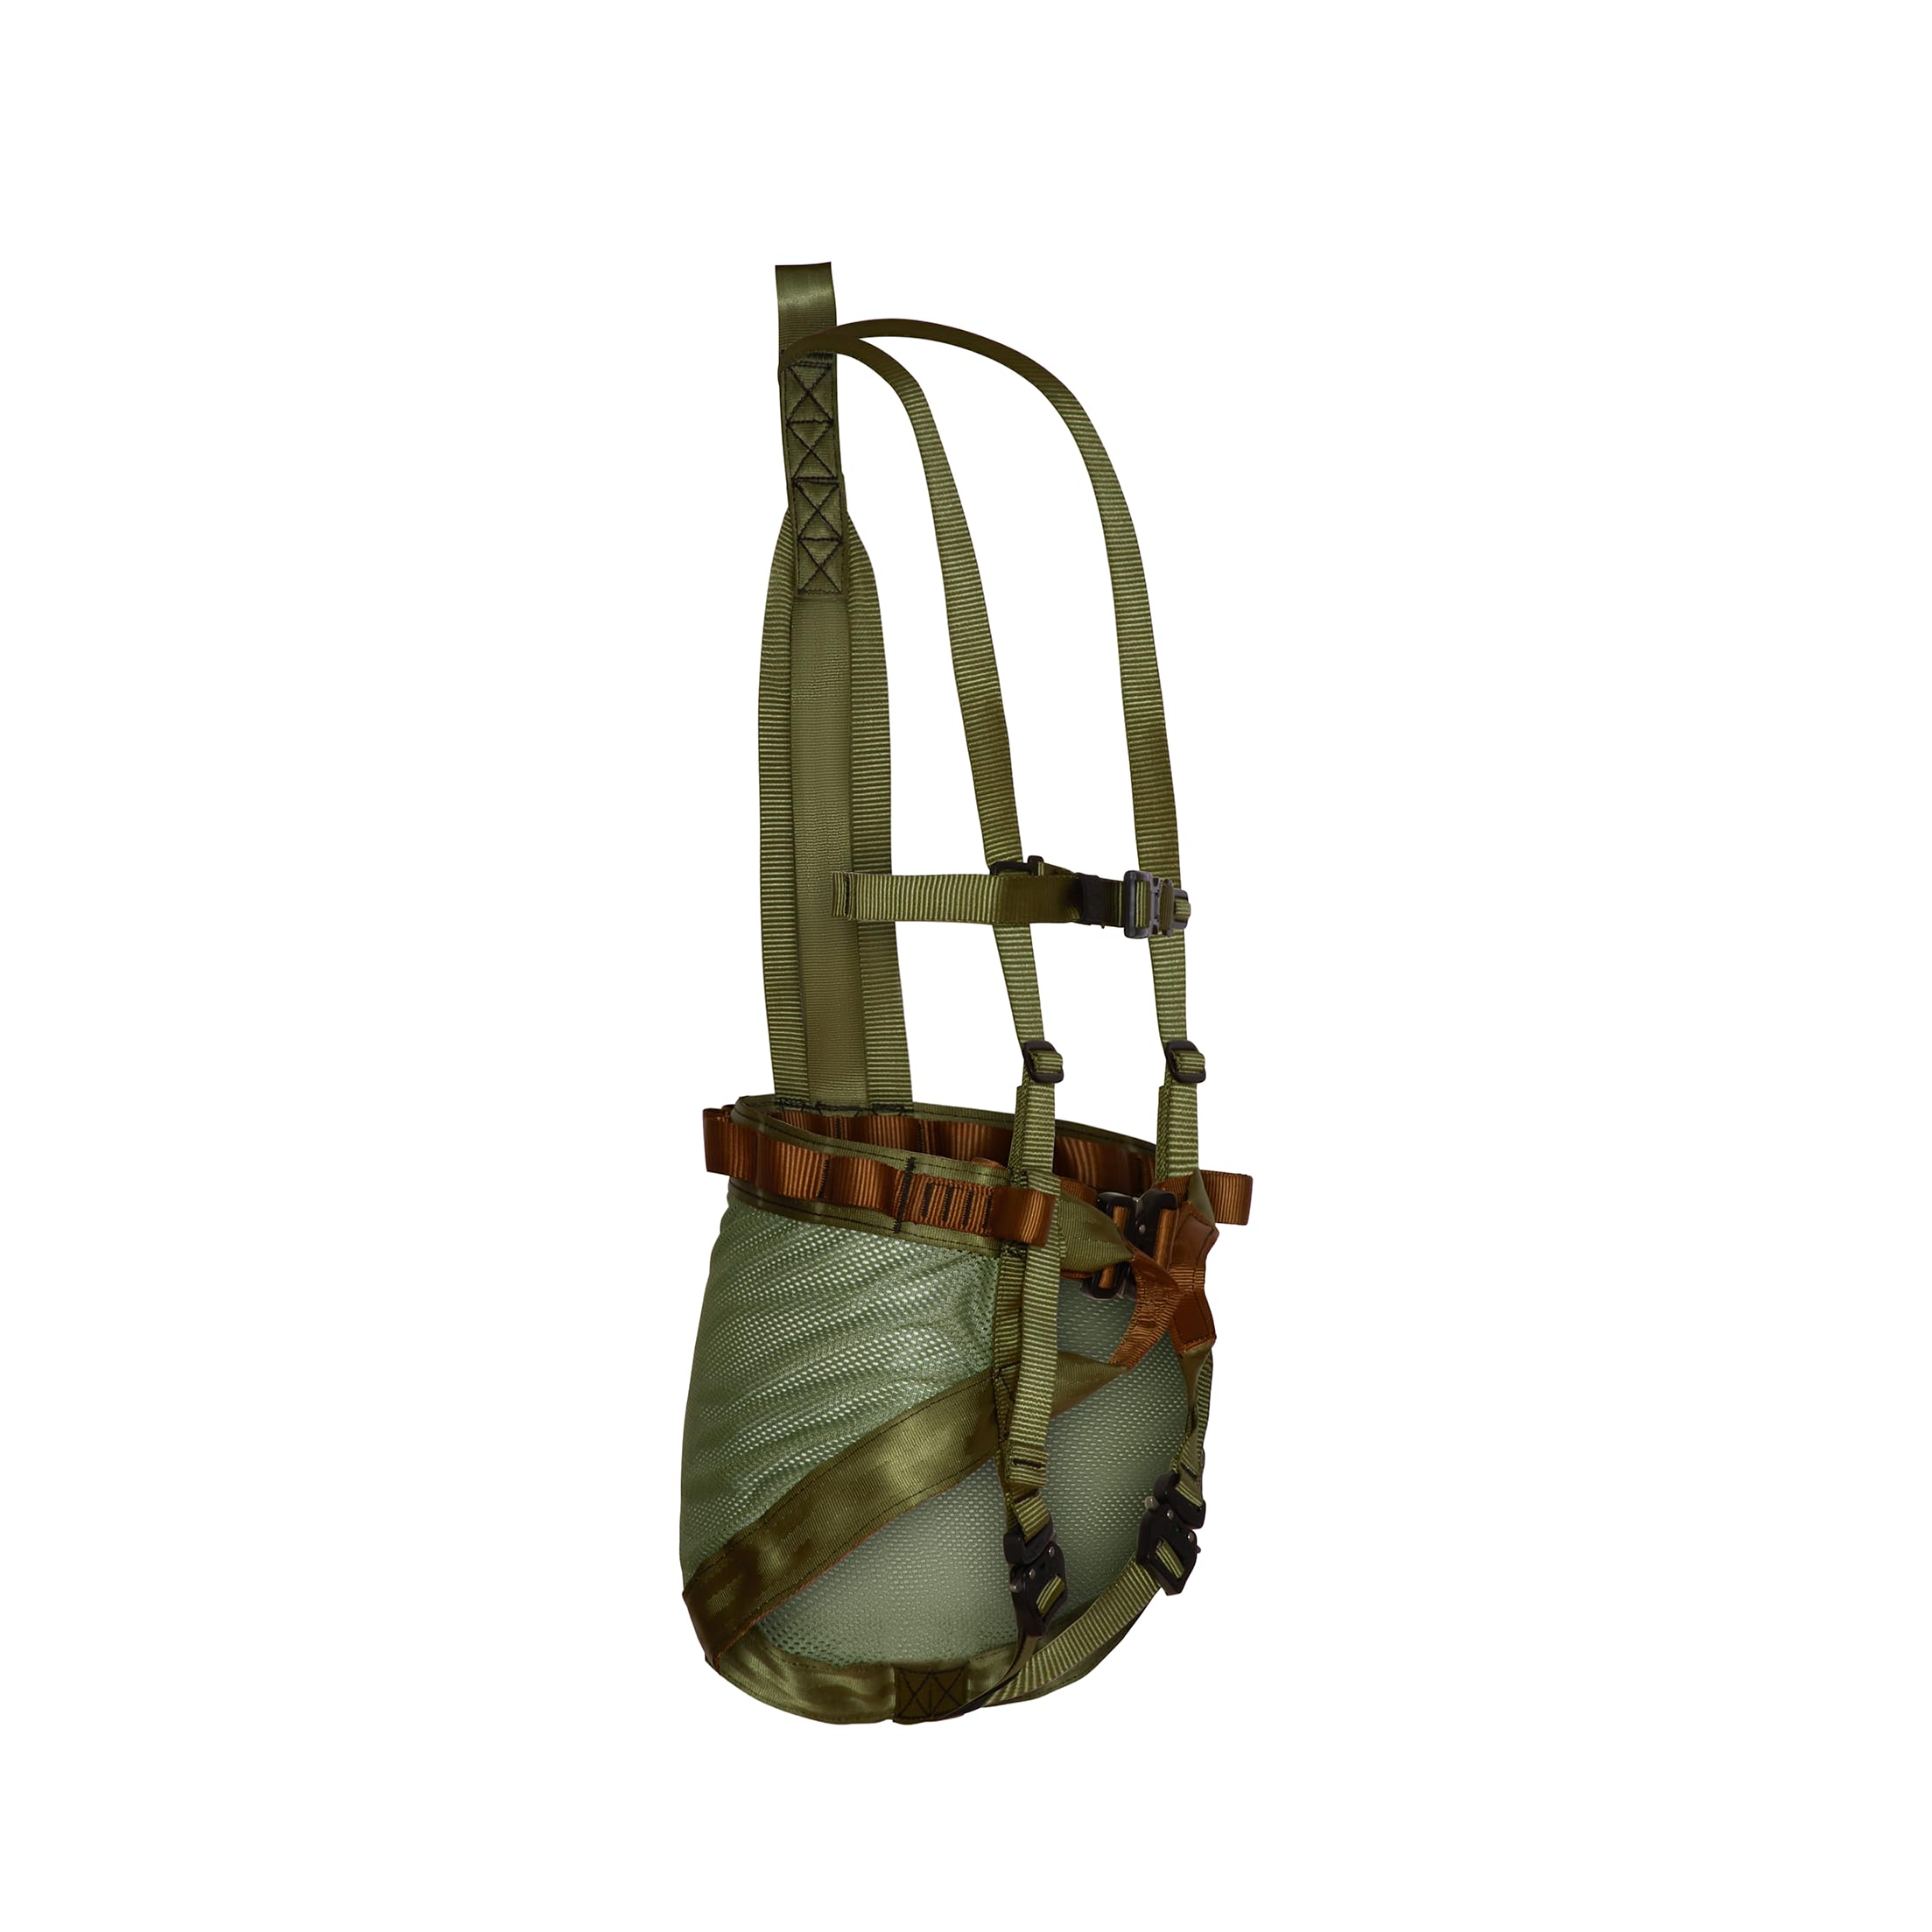 Sandlot Complete Tree Saddle Hunting System - Includes Edge Tree Saddle Platform, Mondo Saddle Harness and Carrying Bag, XOP GREEN